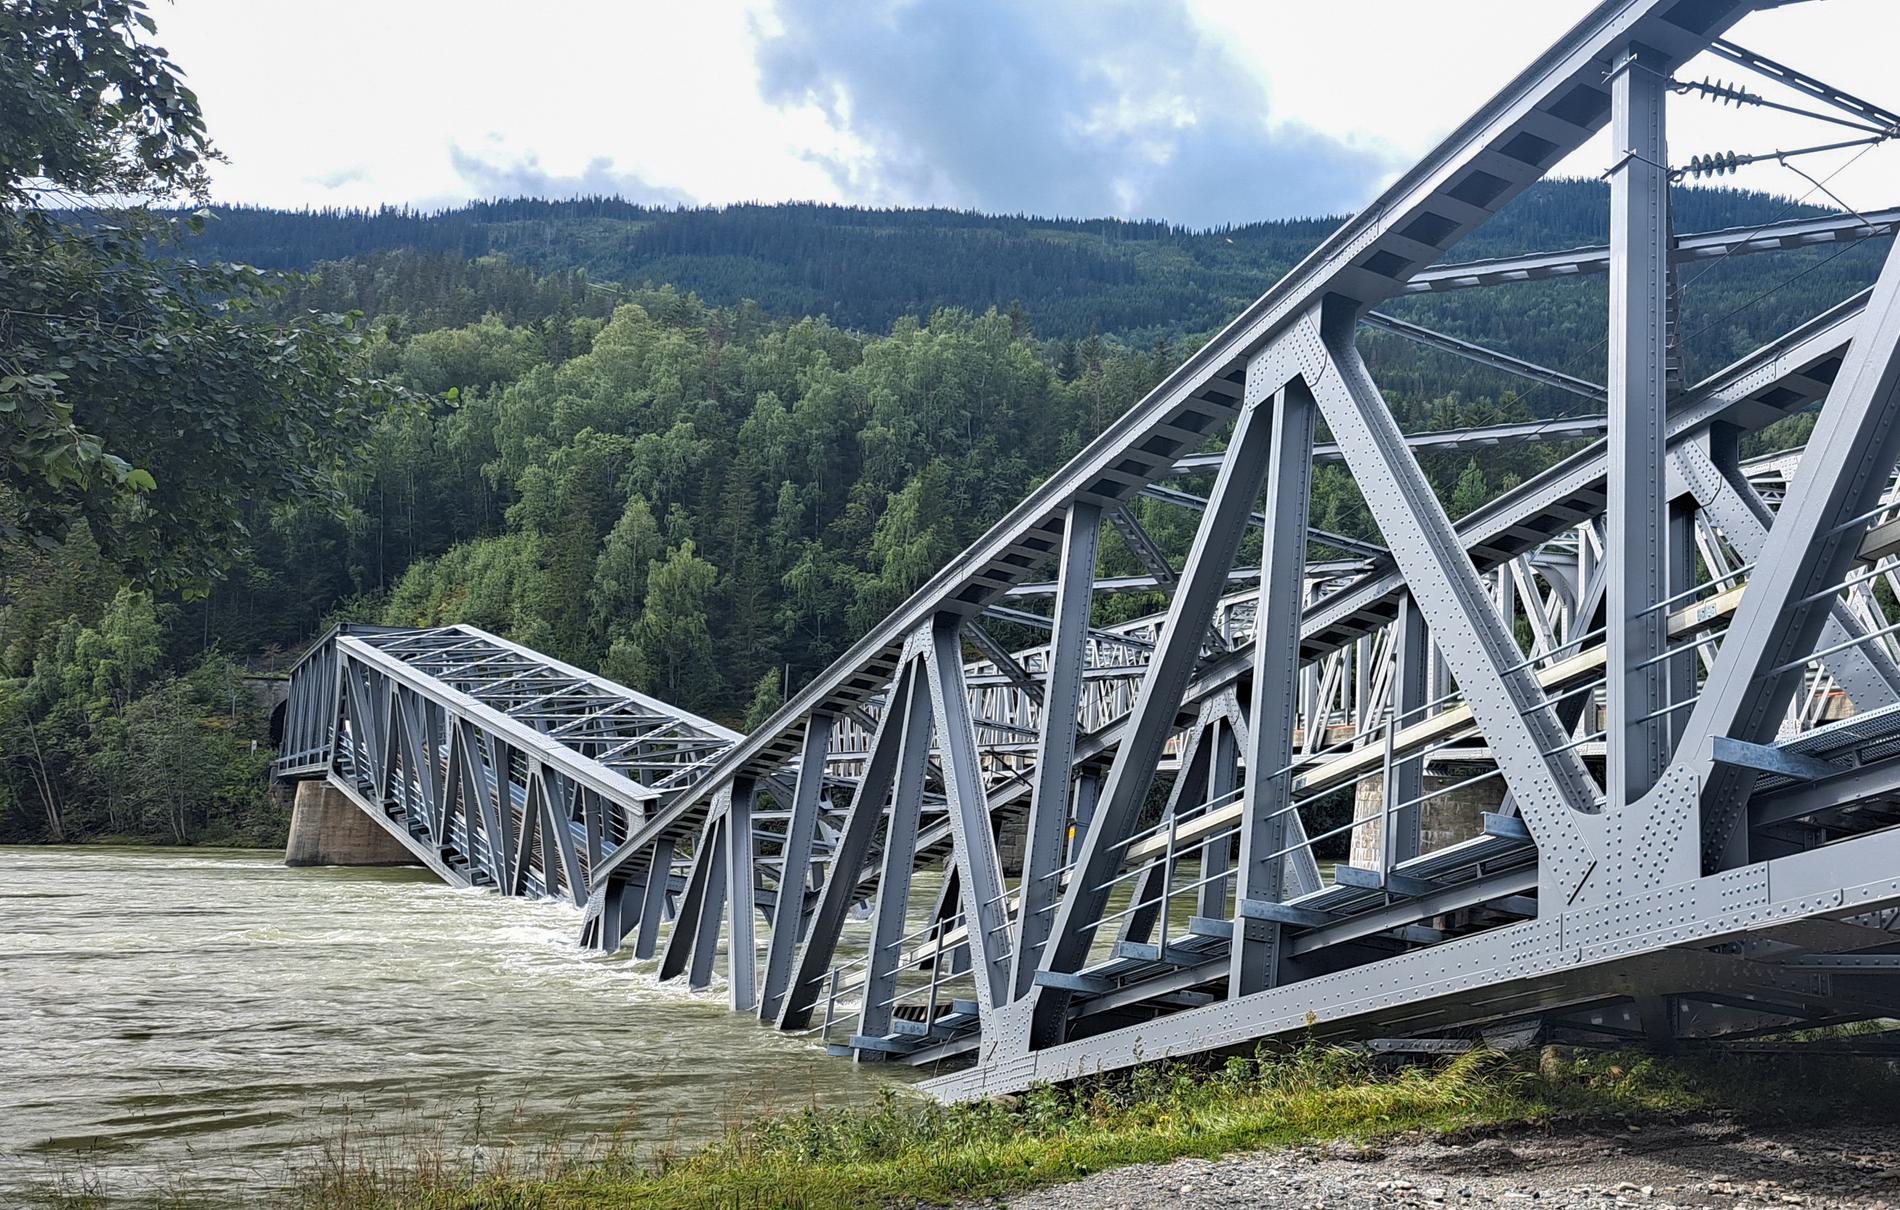 Jernbanebroen over Gudbrandsdalslågen i Ringebu ble i august ødelagt etter ekstremværet Hans. 